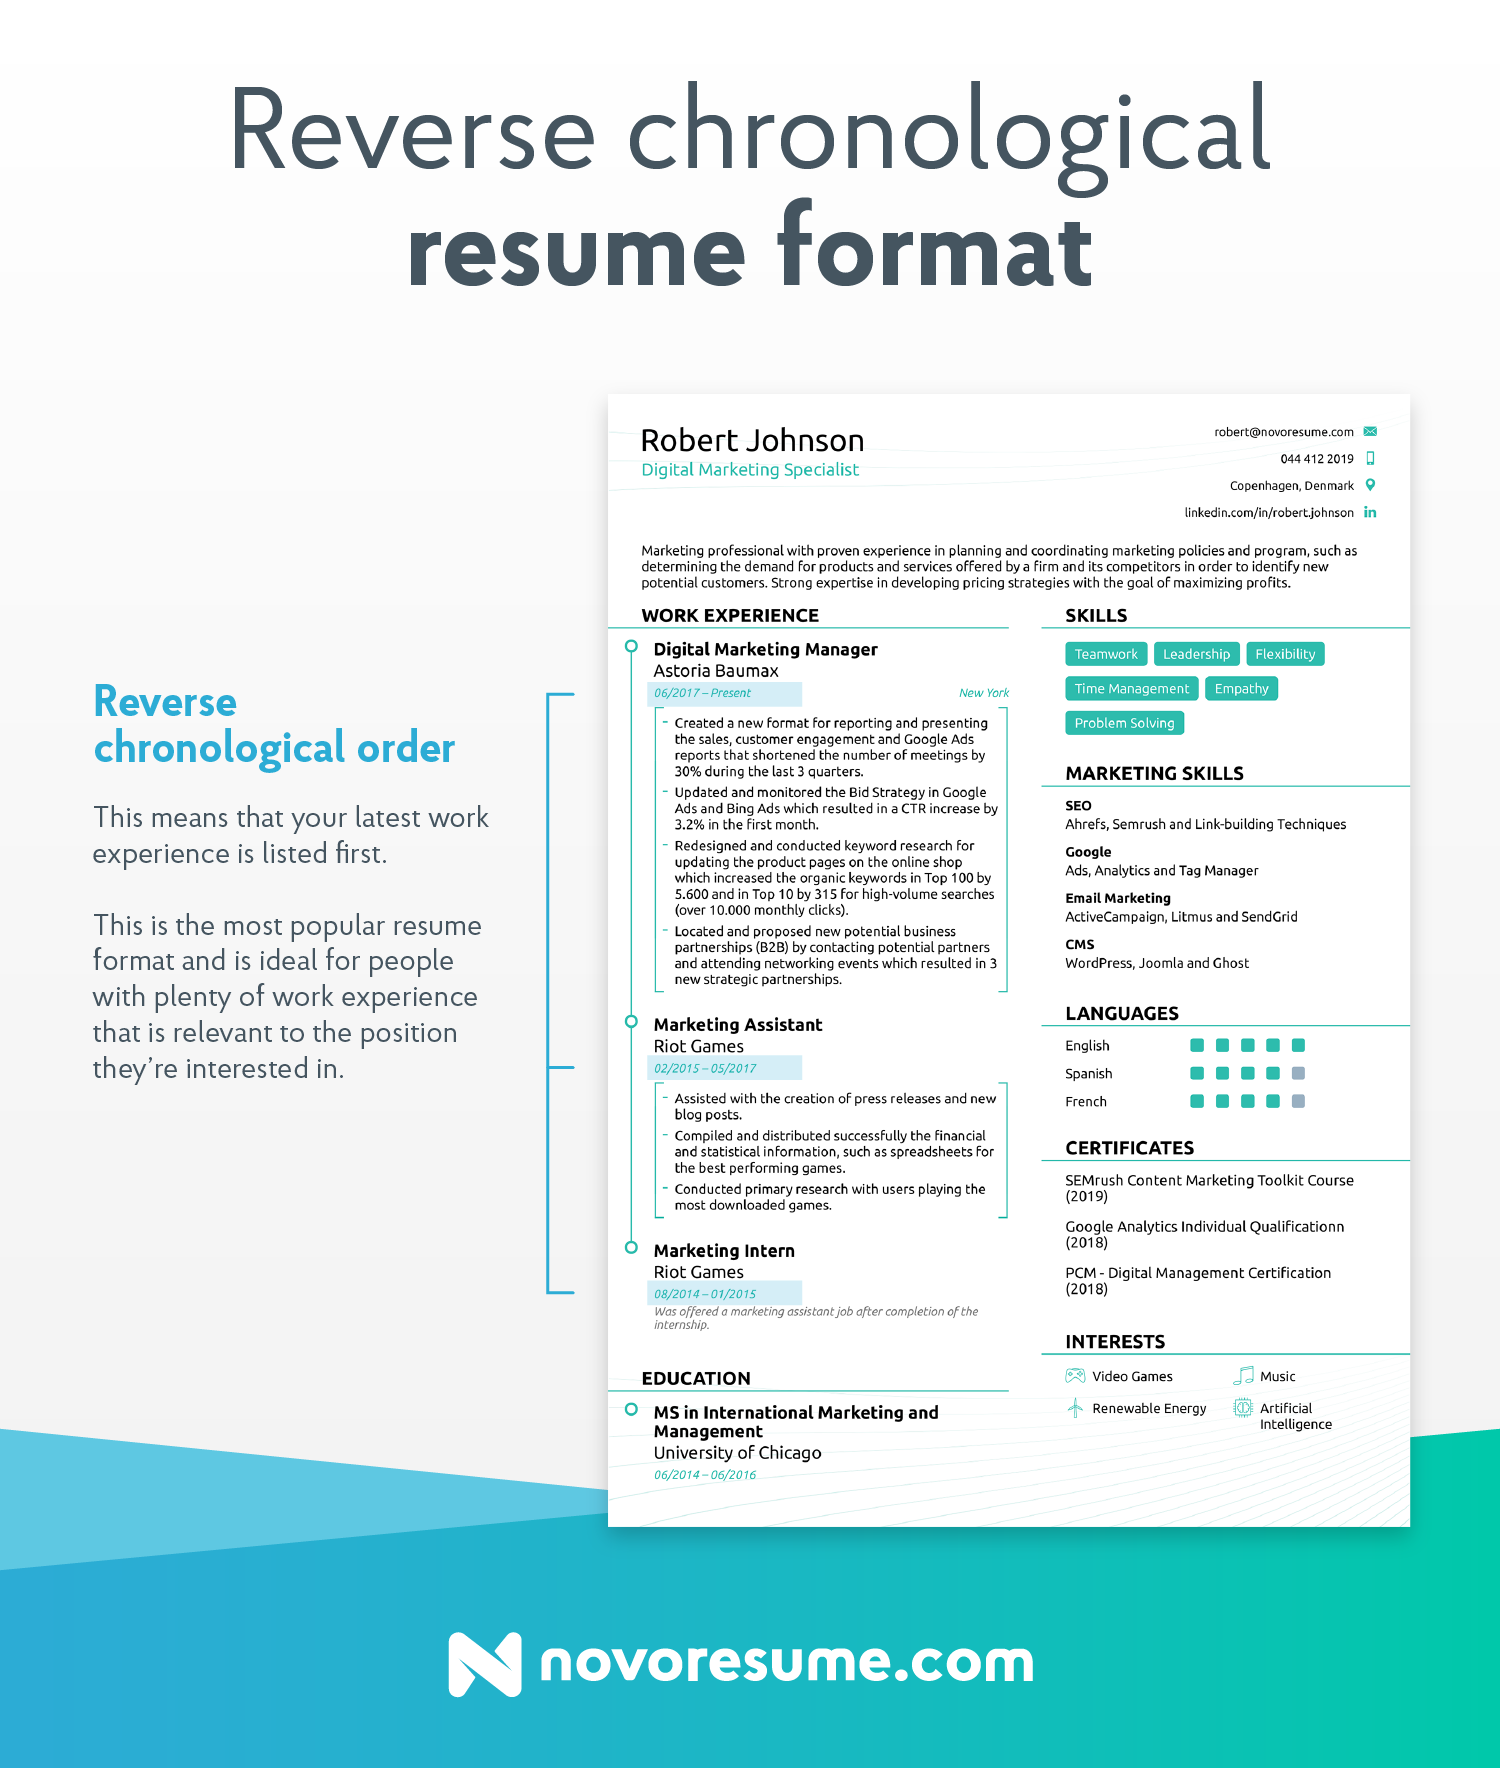 How To Do A Resume Reverse Chronological Resume how to do a resume|wikiresume.com